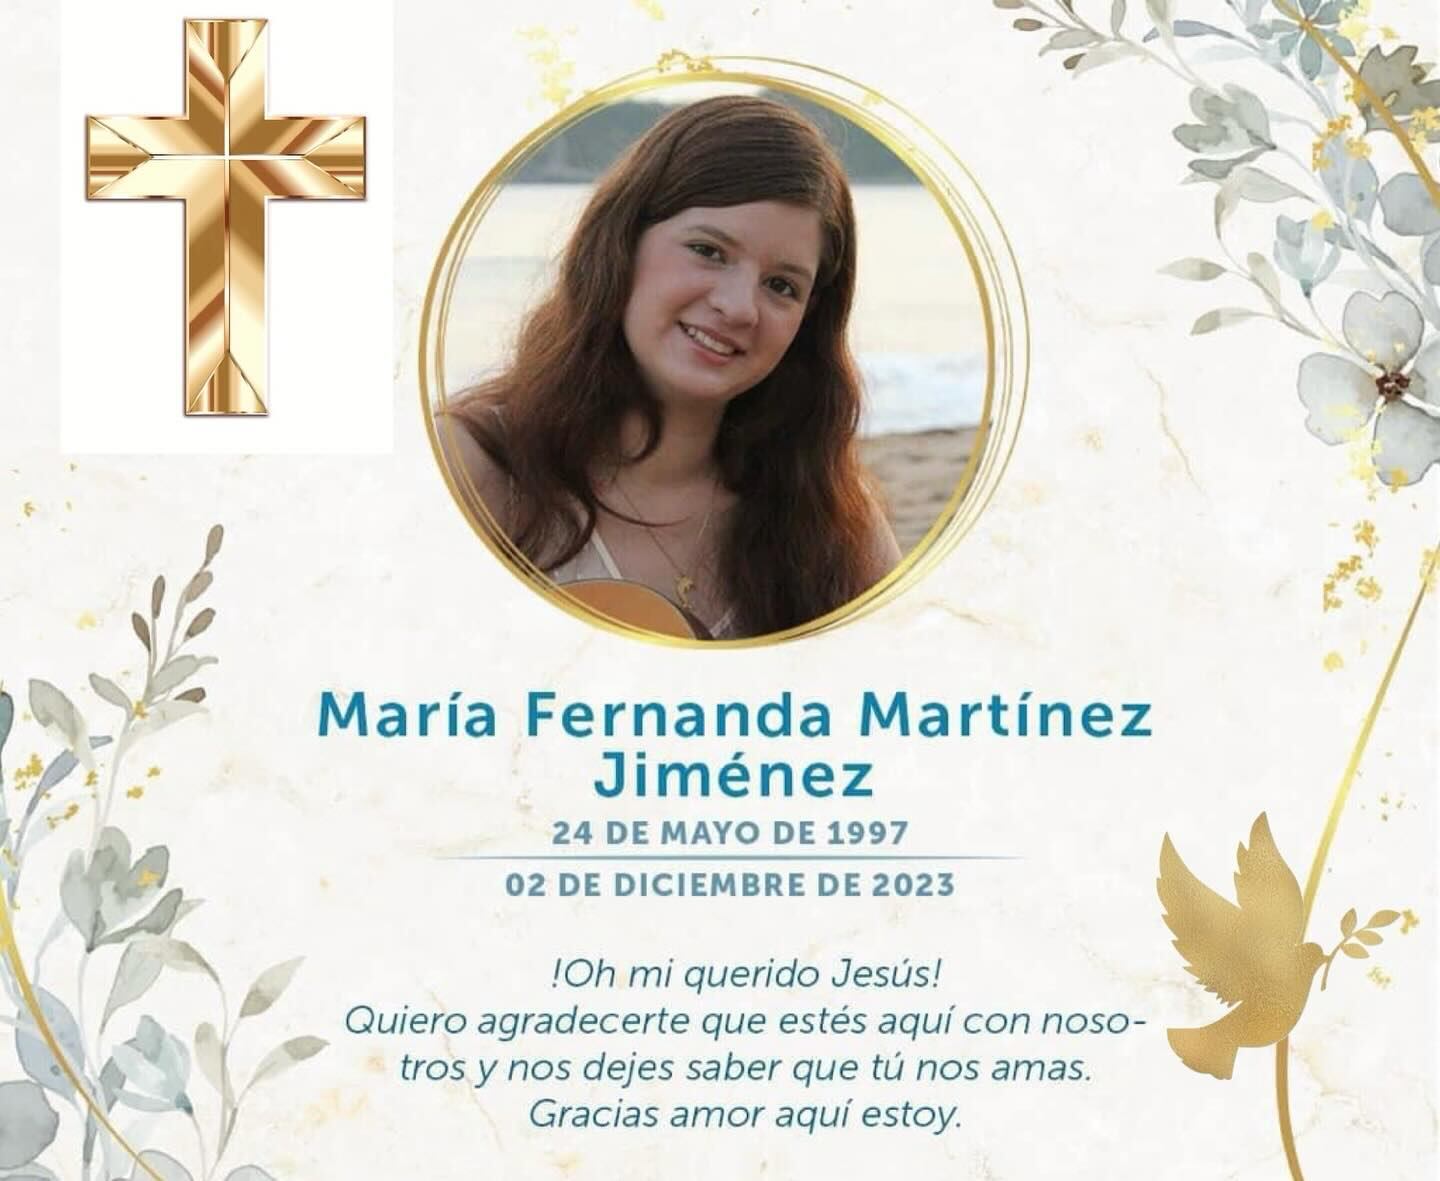 María Fernanda Martínez